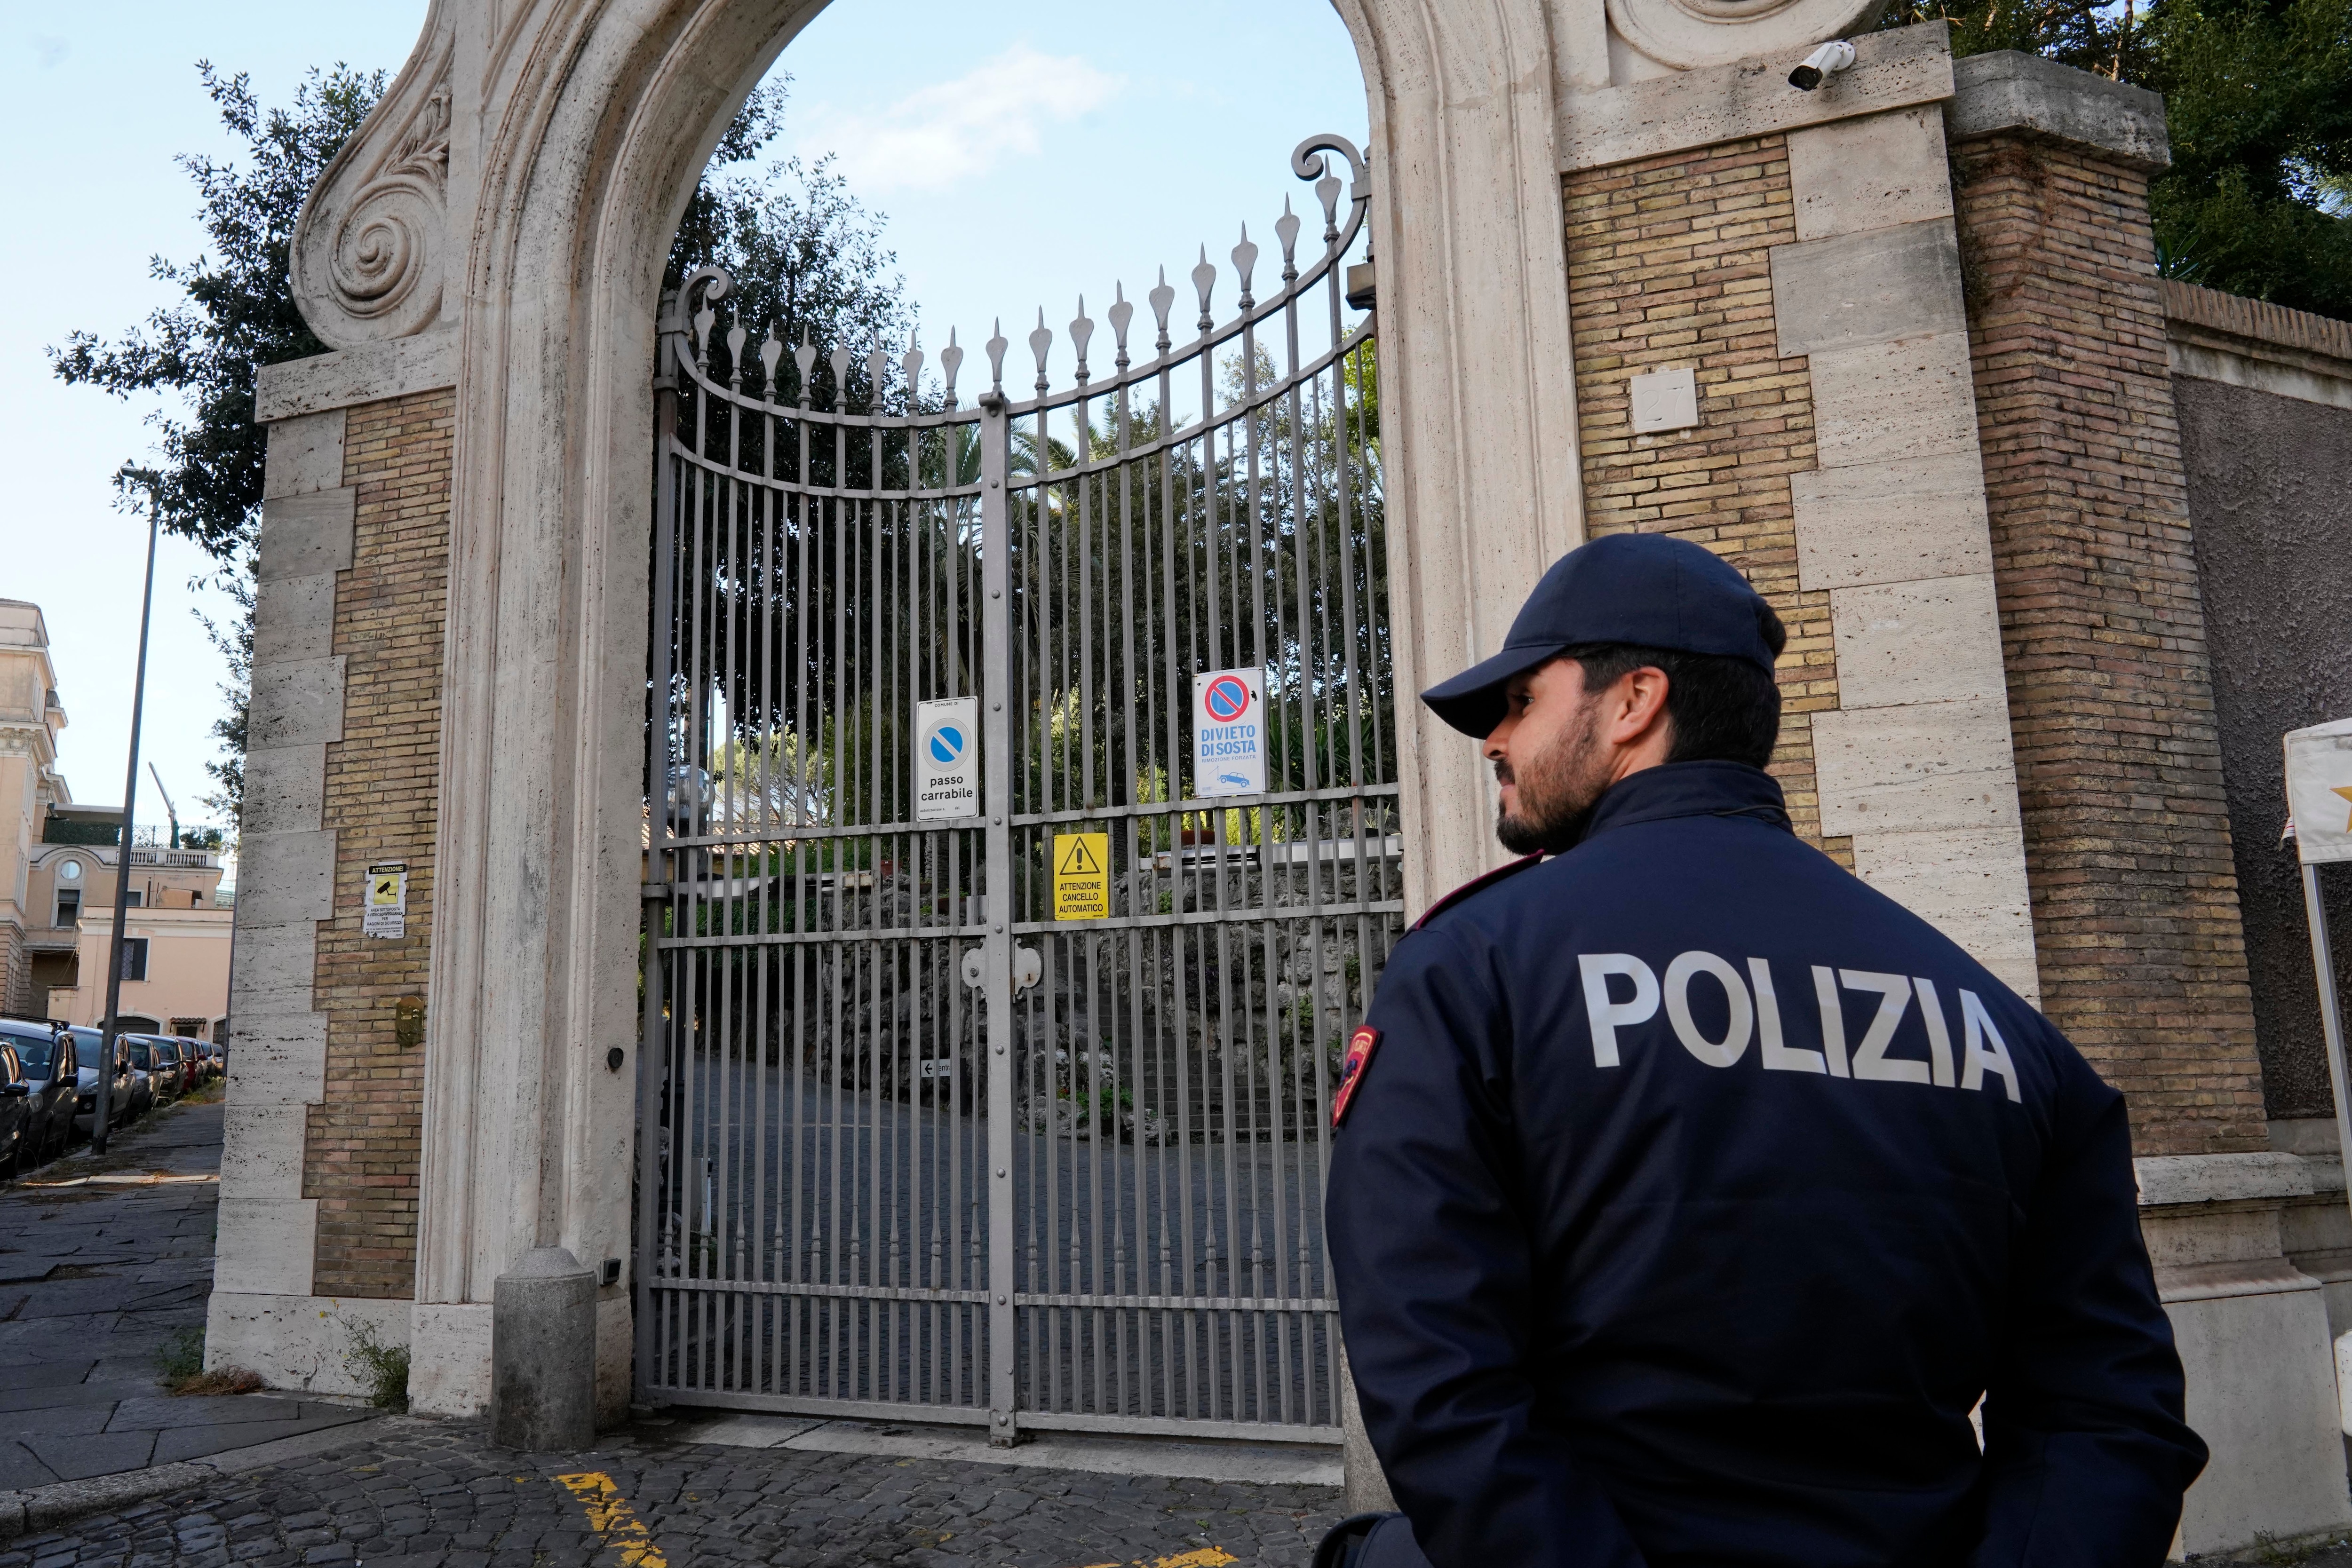 Remains Found At Vatican May Hold Clues To Missing Teens Emanuela Orlandi, Mirella ...7066 x 4711